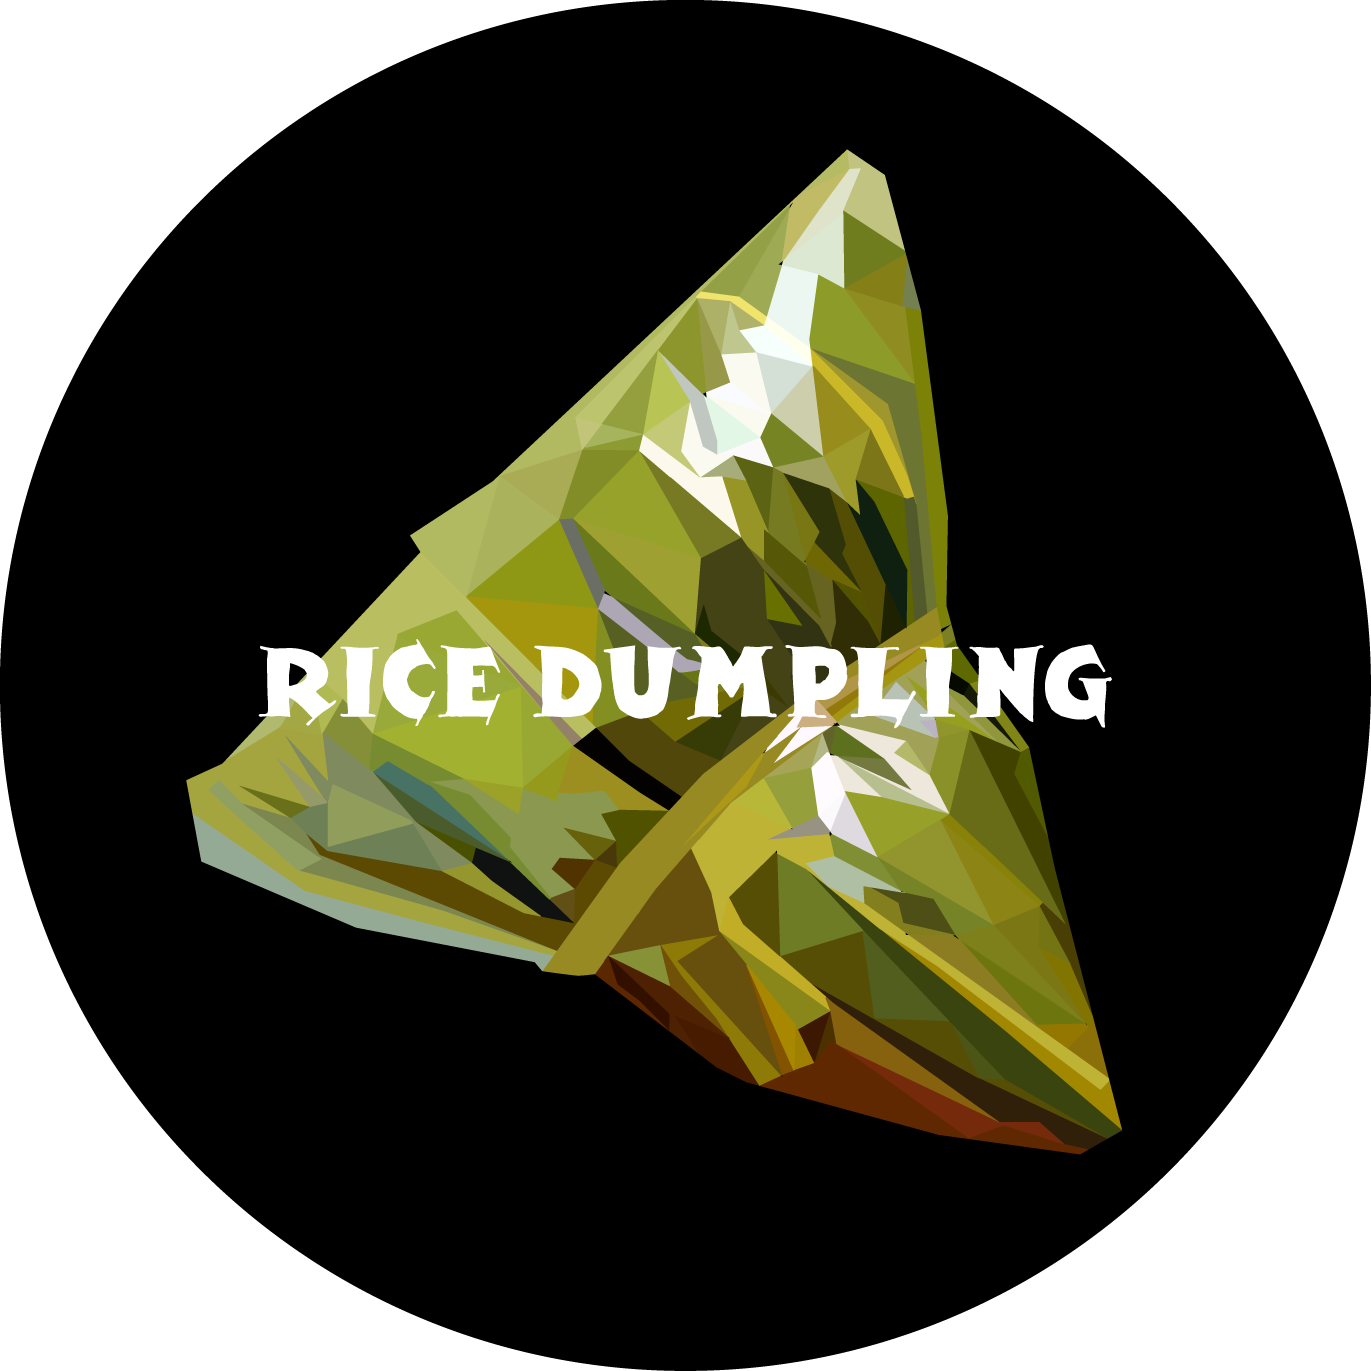 Rice Dumpling - Crystal (1371x1371)